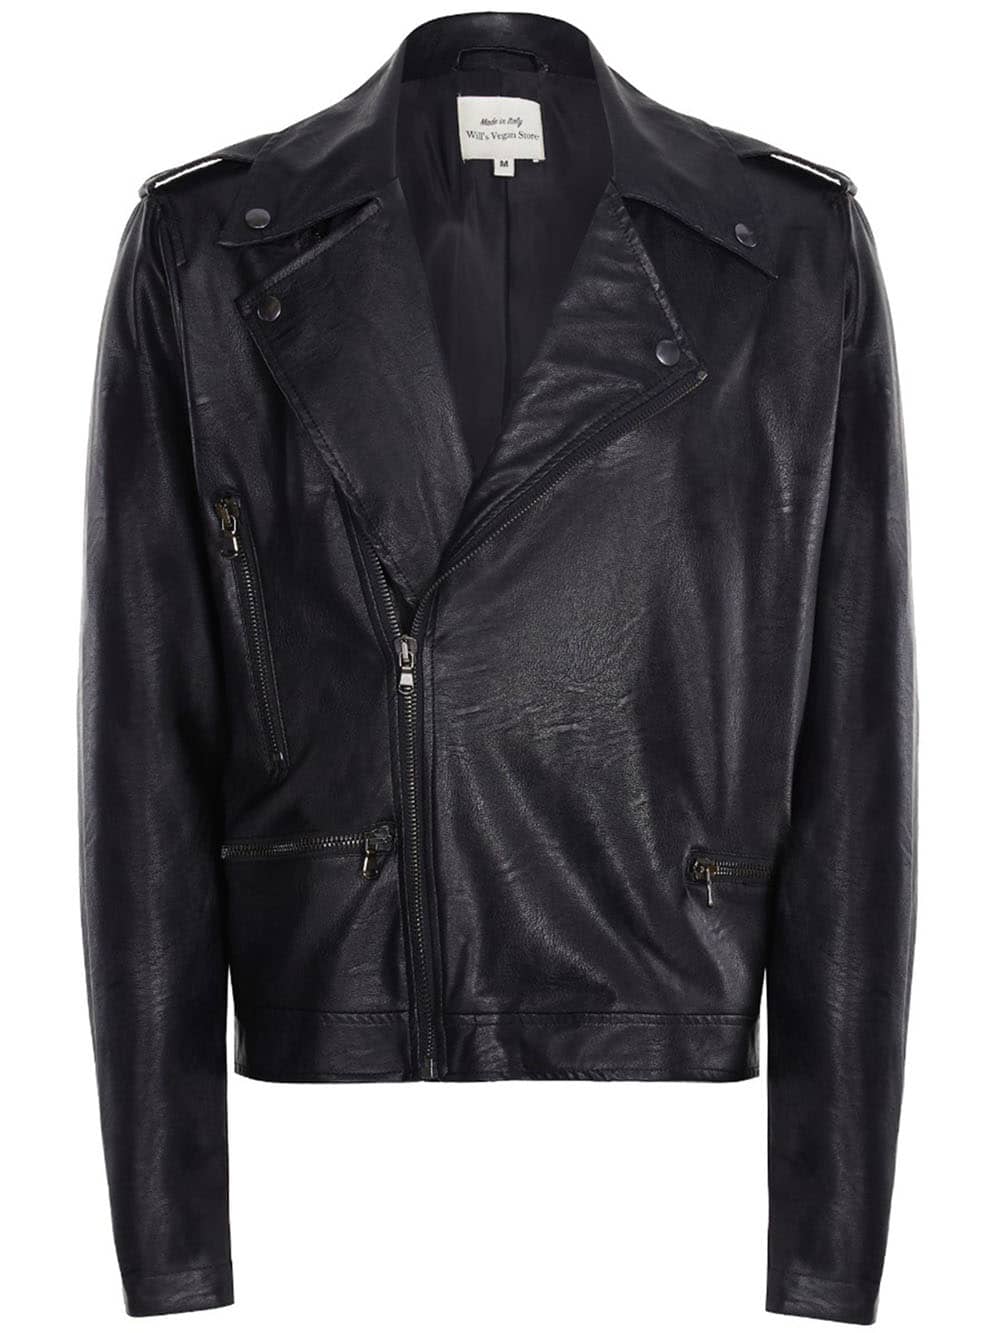 Black vegan leather biker jacket from vegan jackets mens maker Wills Vegan Store